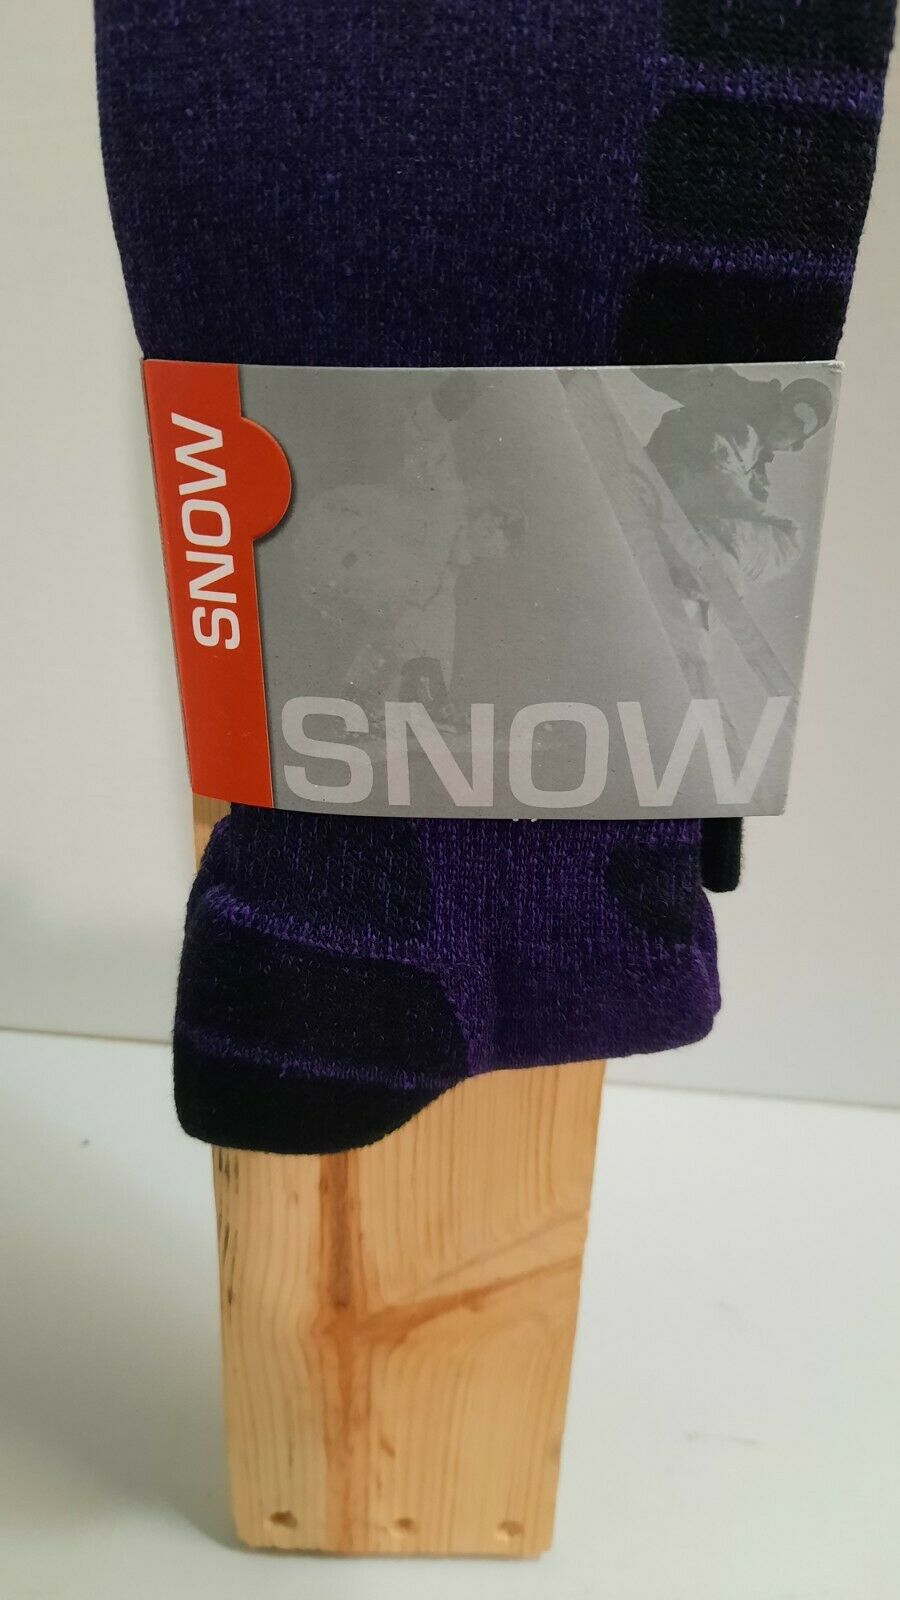 Euro Technically superior snow socks size medium